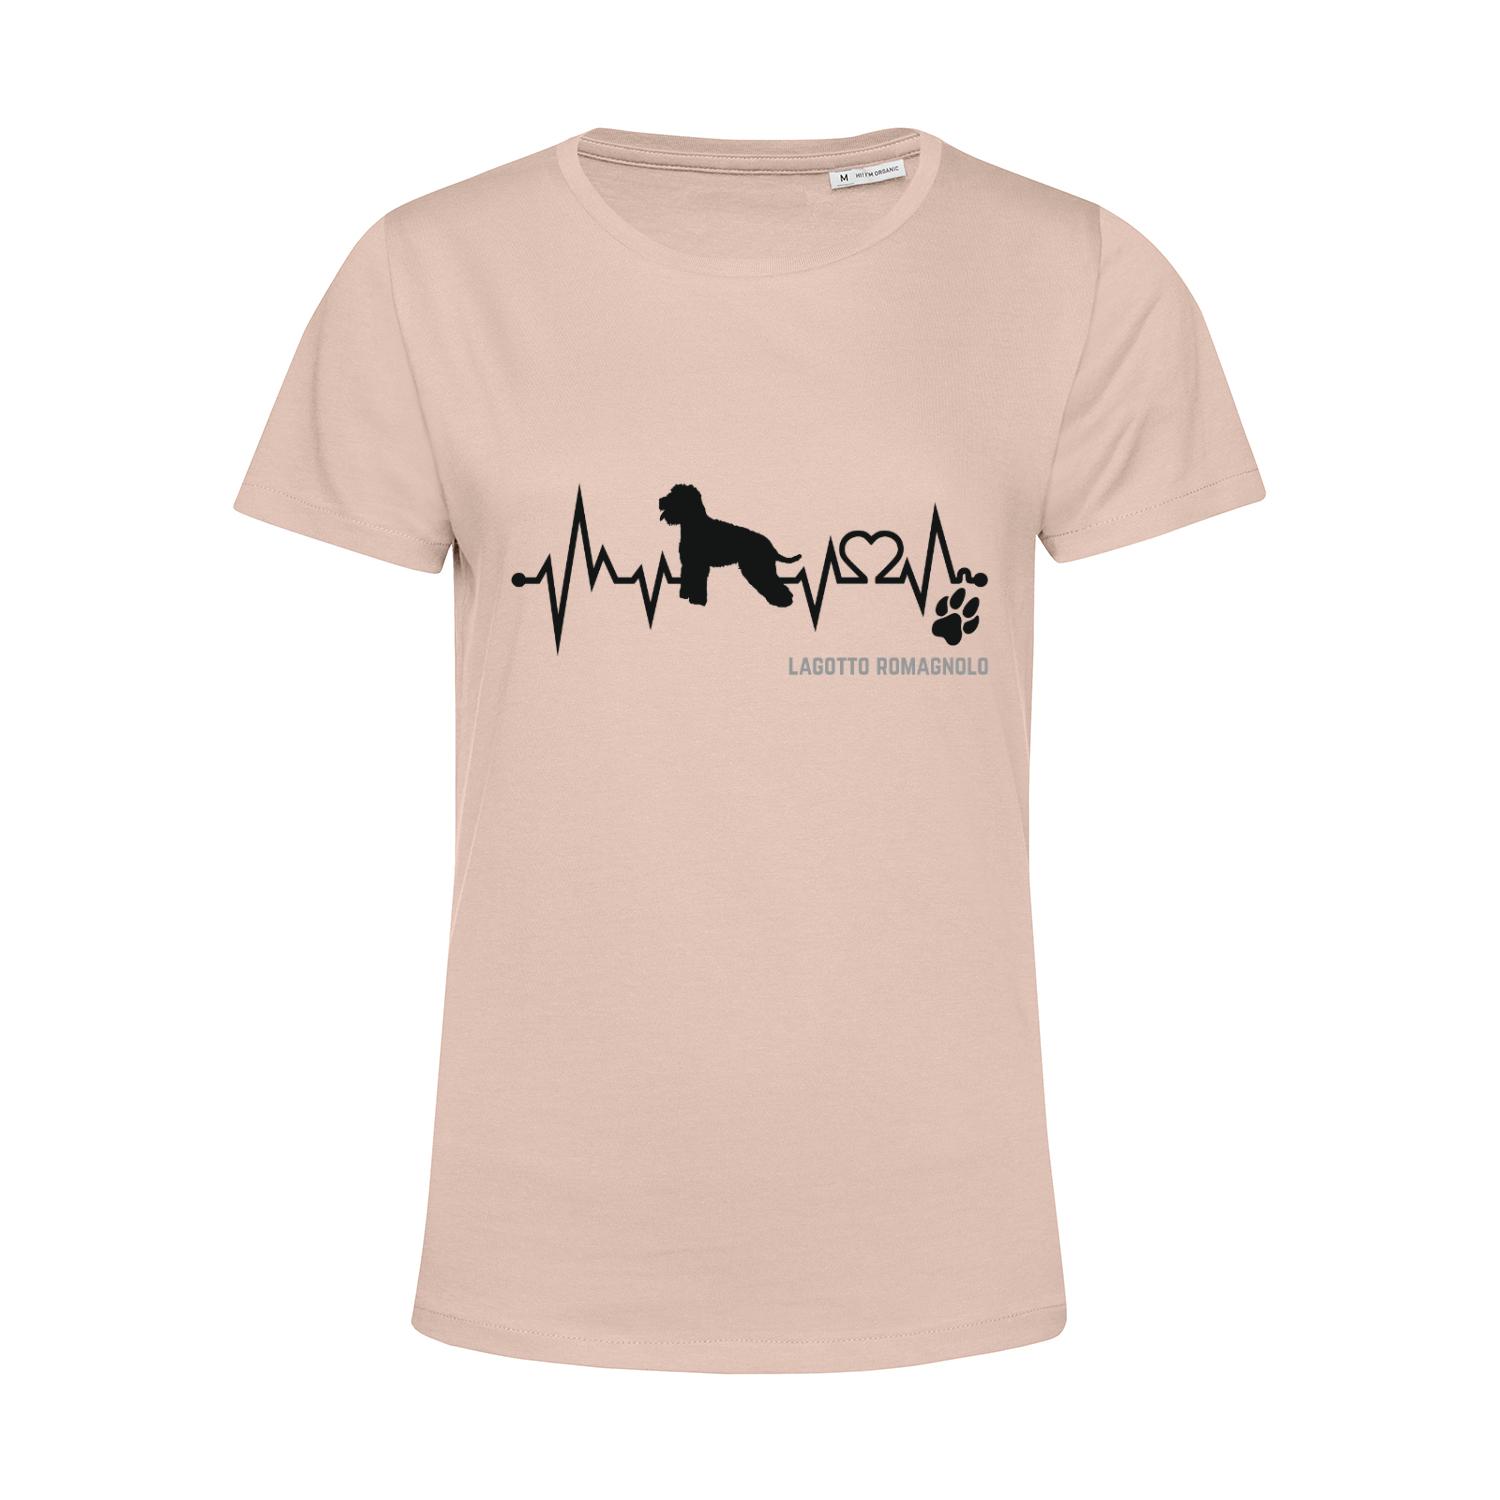 Nachhaltiges T-Shirt Damen Hunde - Lagotto Romagnolo Herzstromkurve